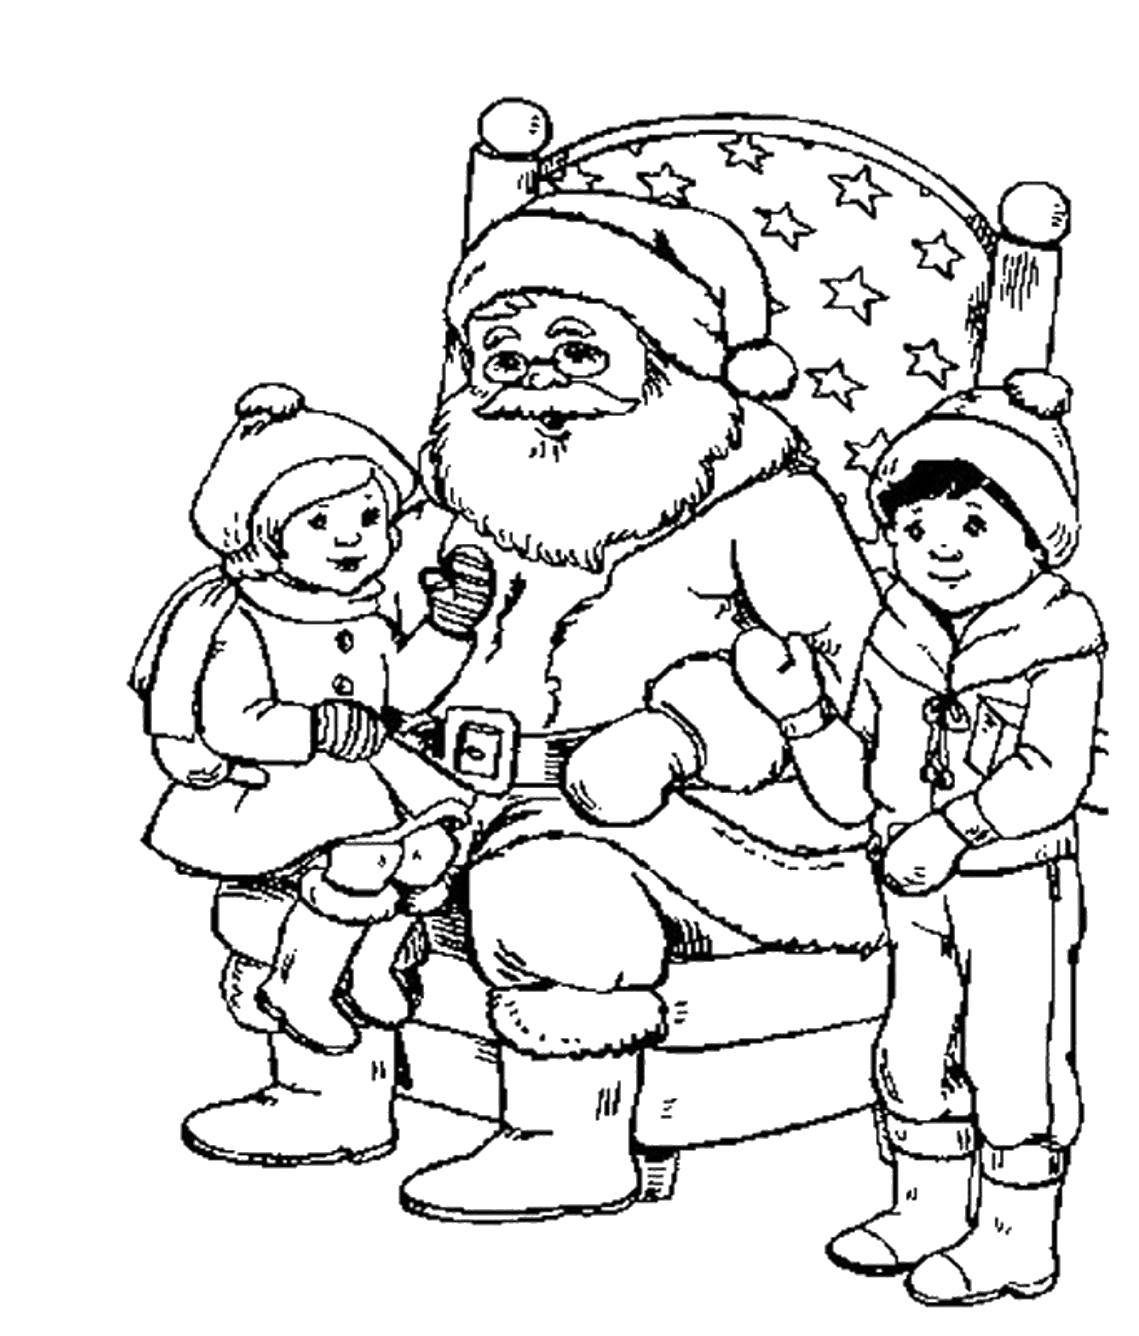 Название: Раскраска Санта клаус принёс подарочки. Категория: рождество. Теги: Рождество, Санта Клаус, подарки.